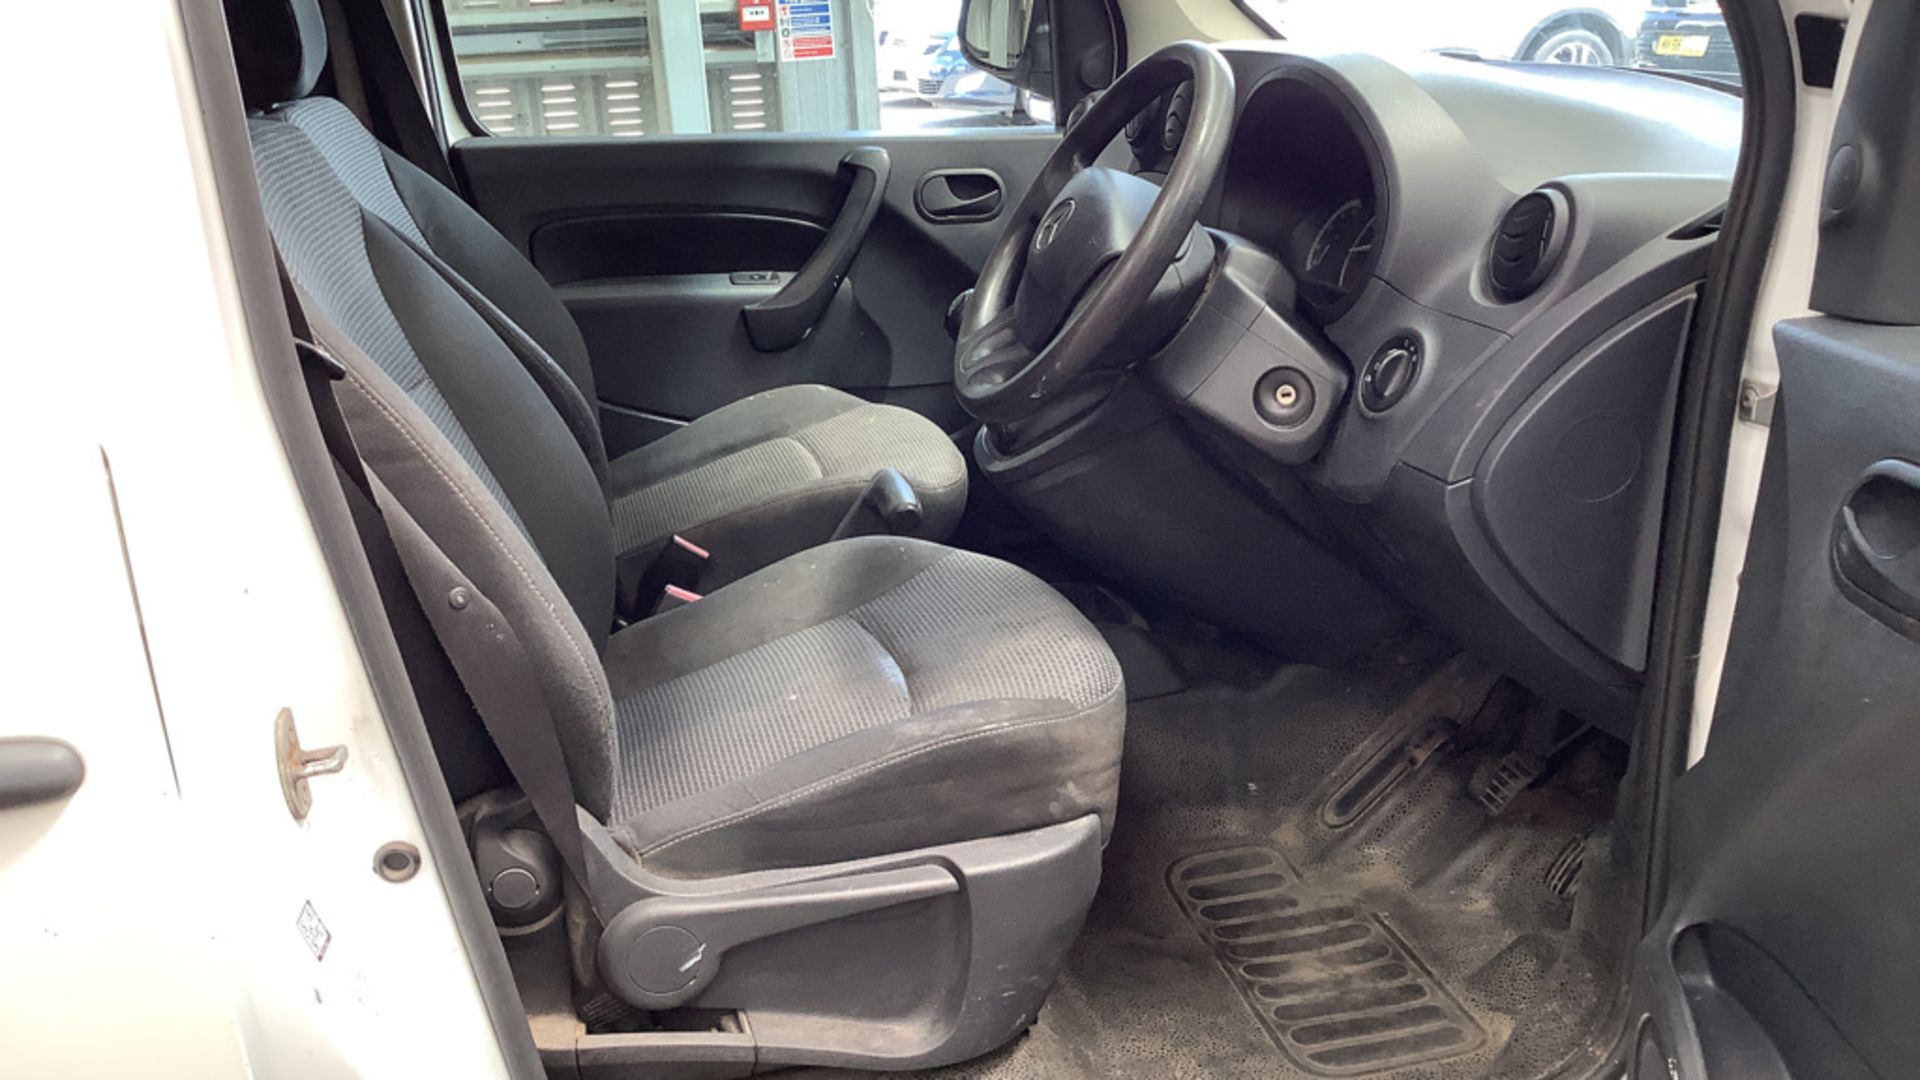 ** ON SALE ** Mercedes Benz Citan 109 1.5 CDI Long 2016 '16 Reg' - Panel Van - Image 7 of 8